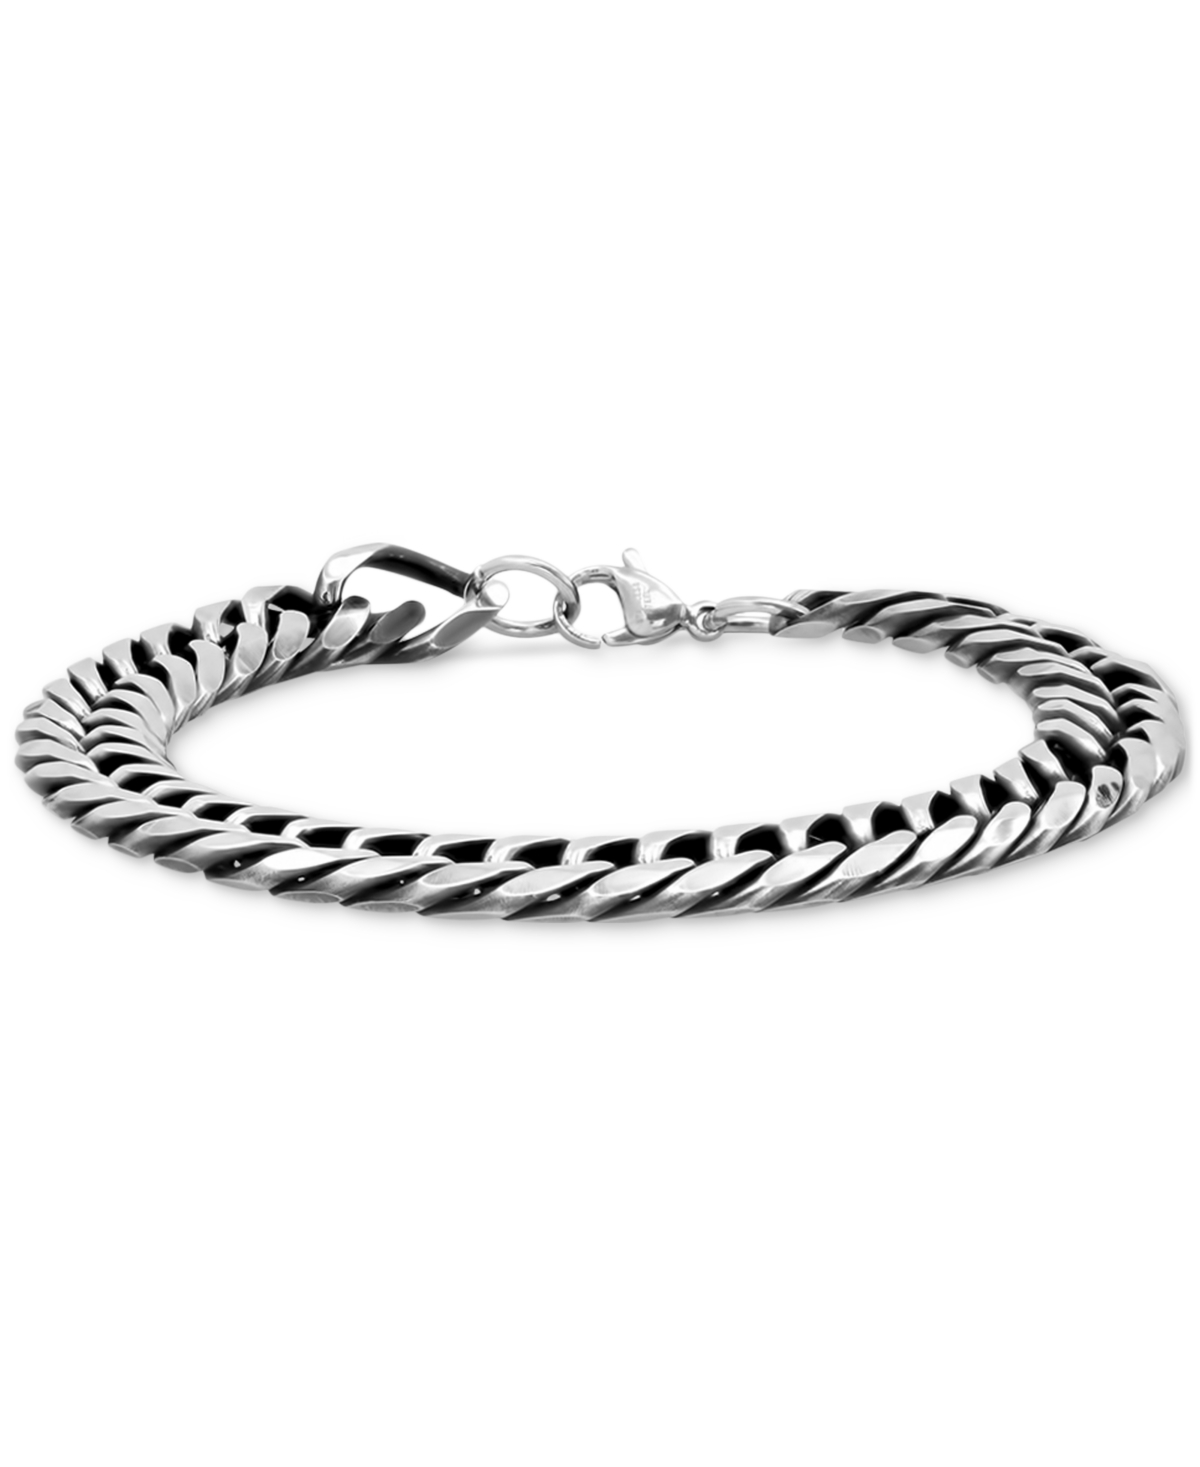 Men's Silver-Tone Cuban Link Chain Bracelet - Hematite